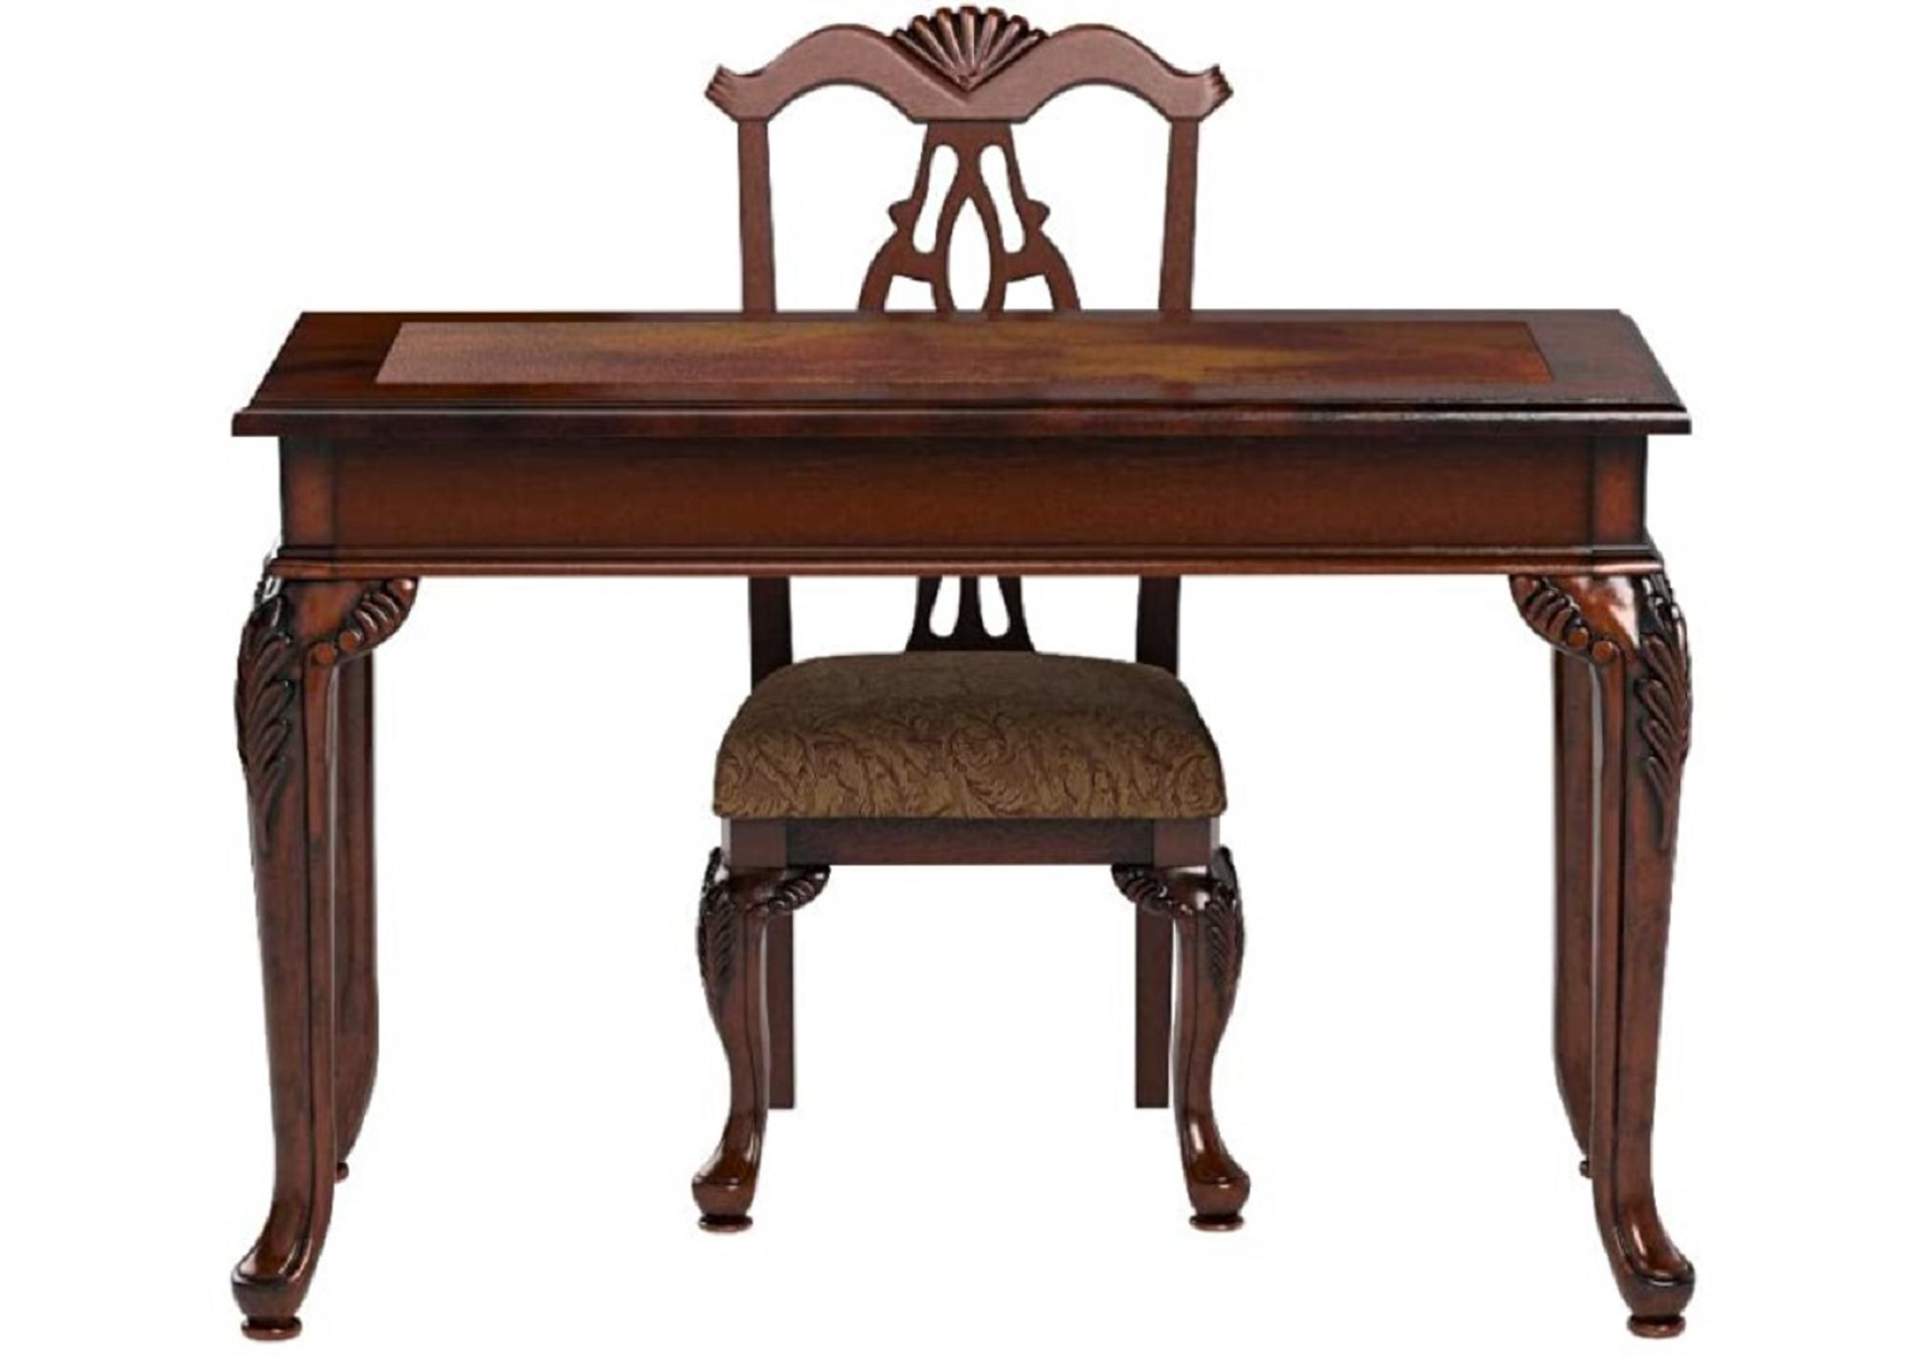 Fairfax Brown Fairfax Home Office Desk&Chair Set,Crown Mark